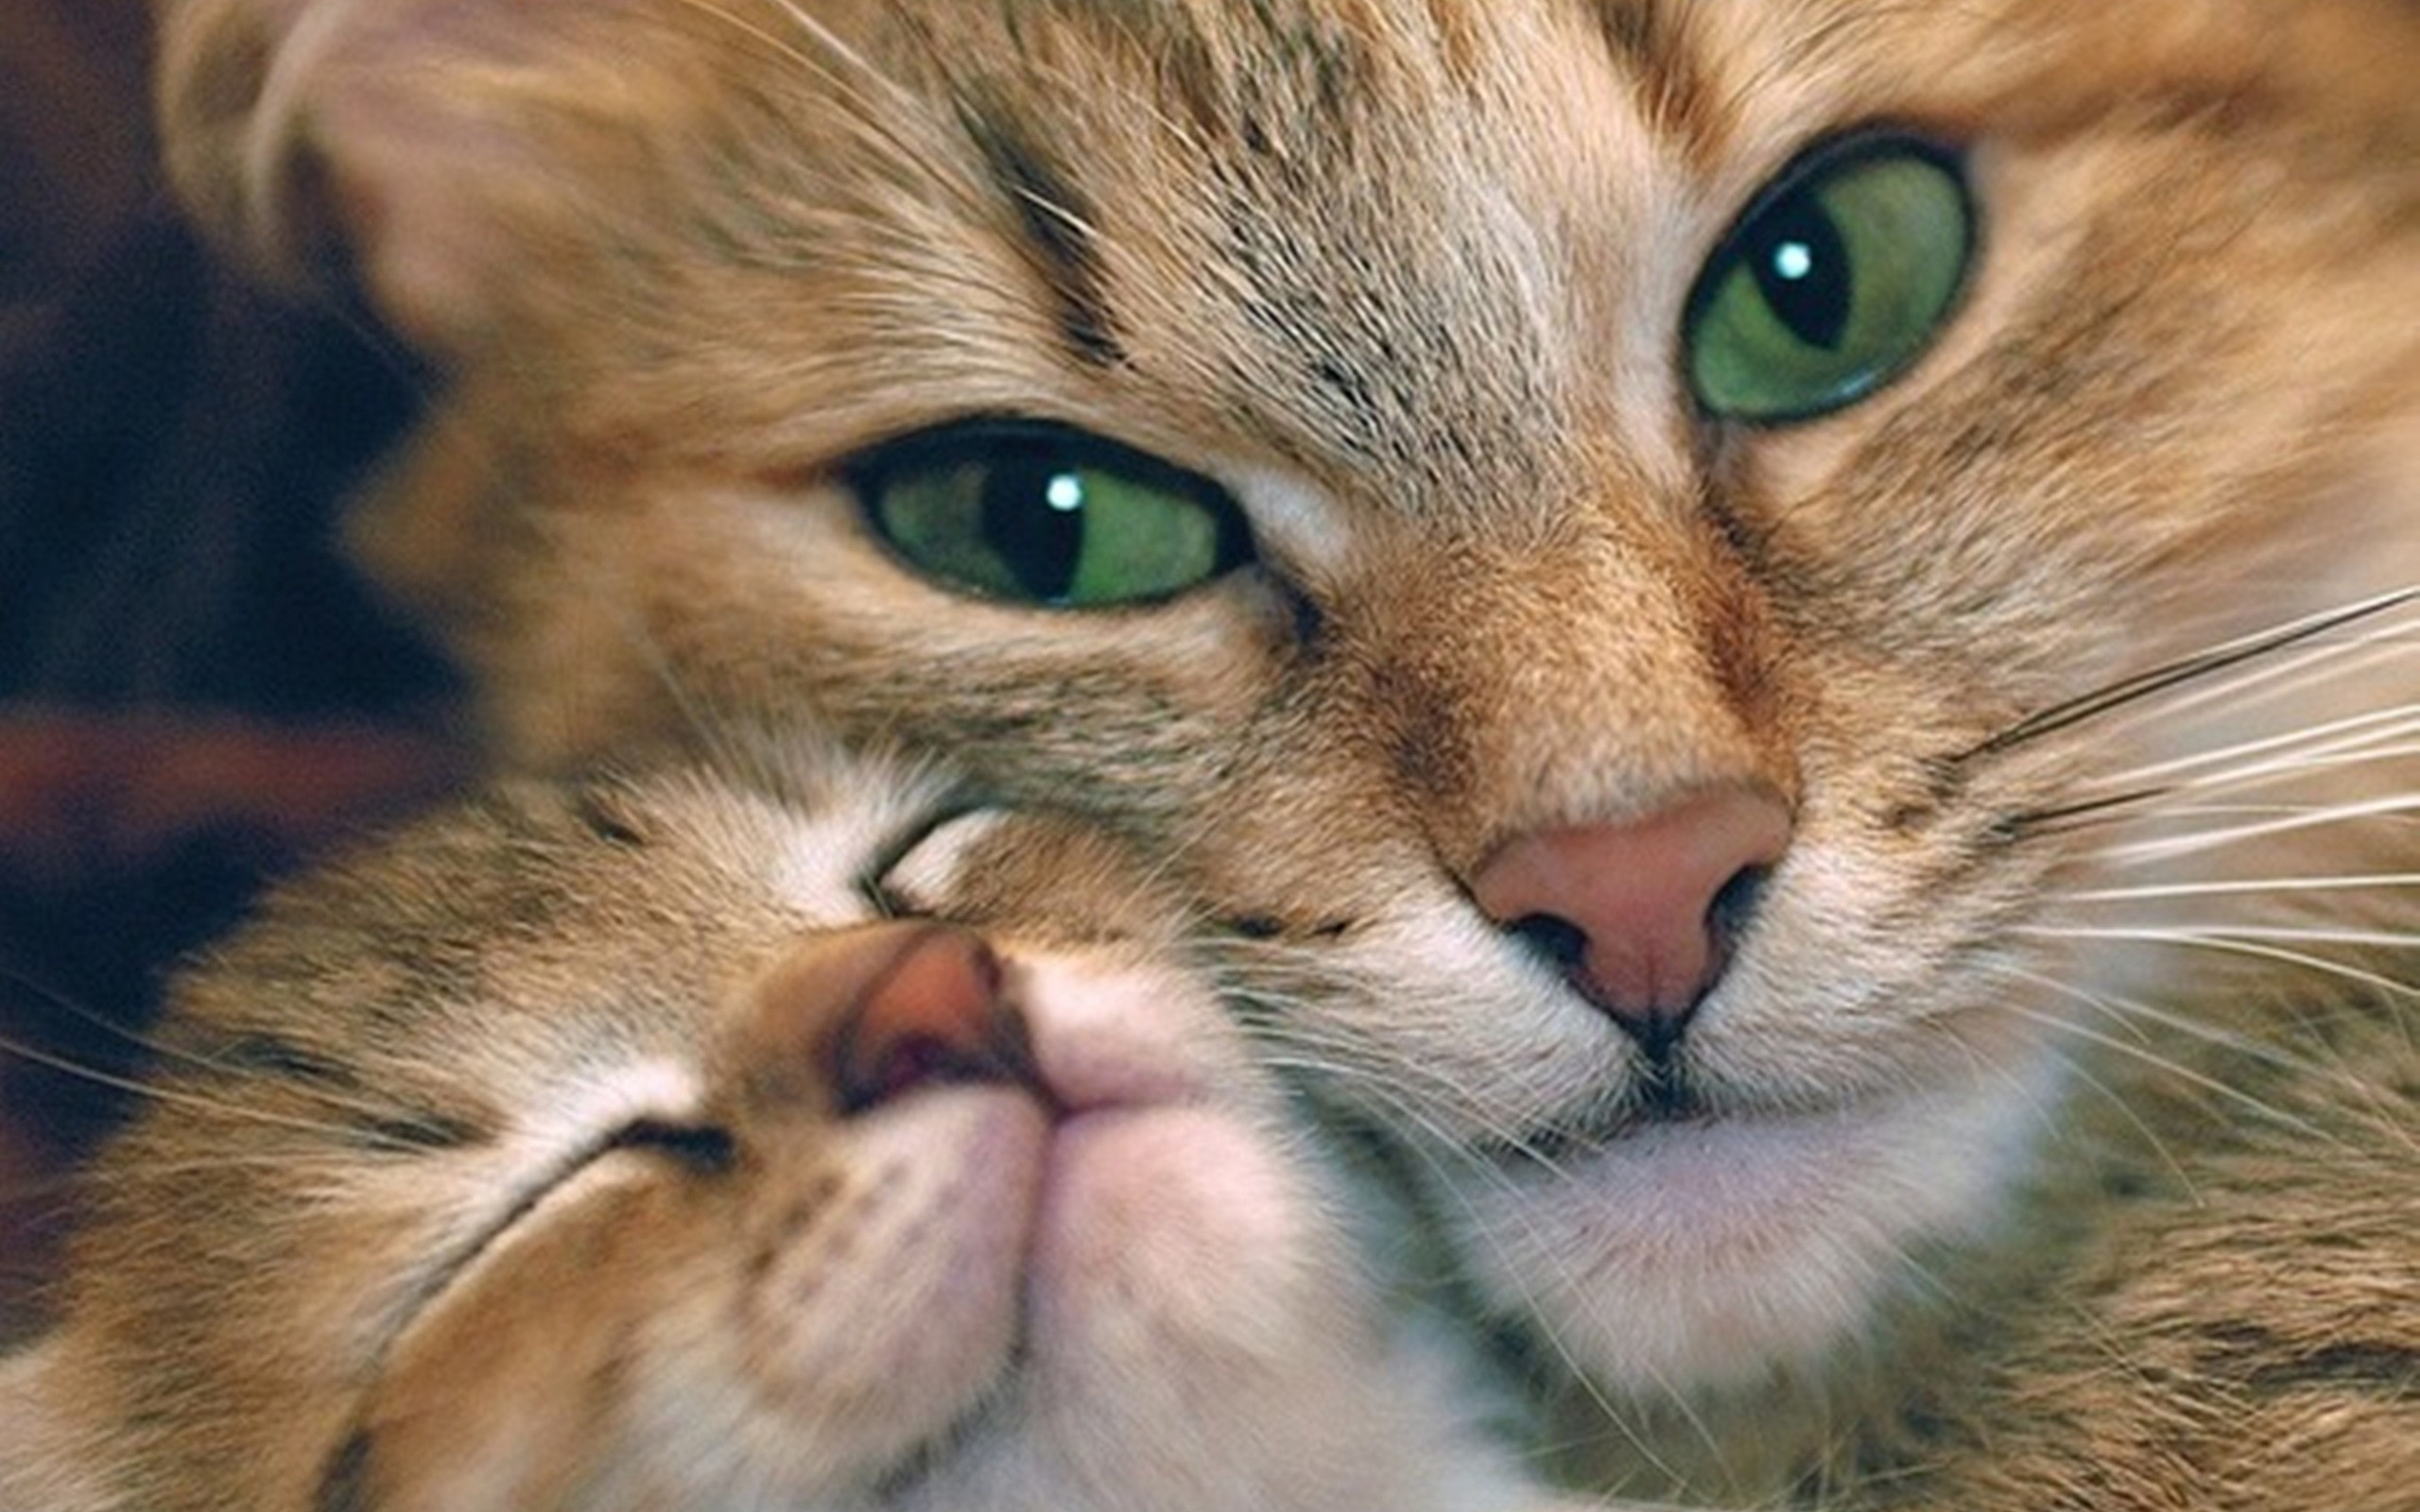 cats, animals, kittens - desktop wallpaper